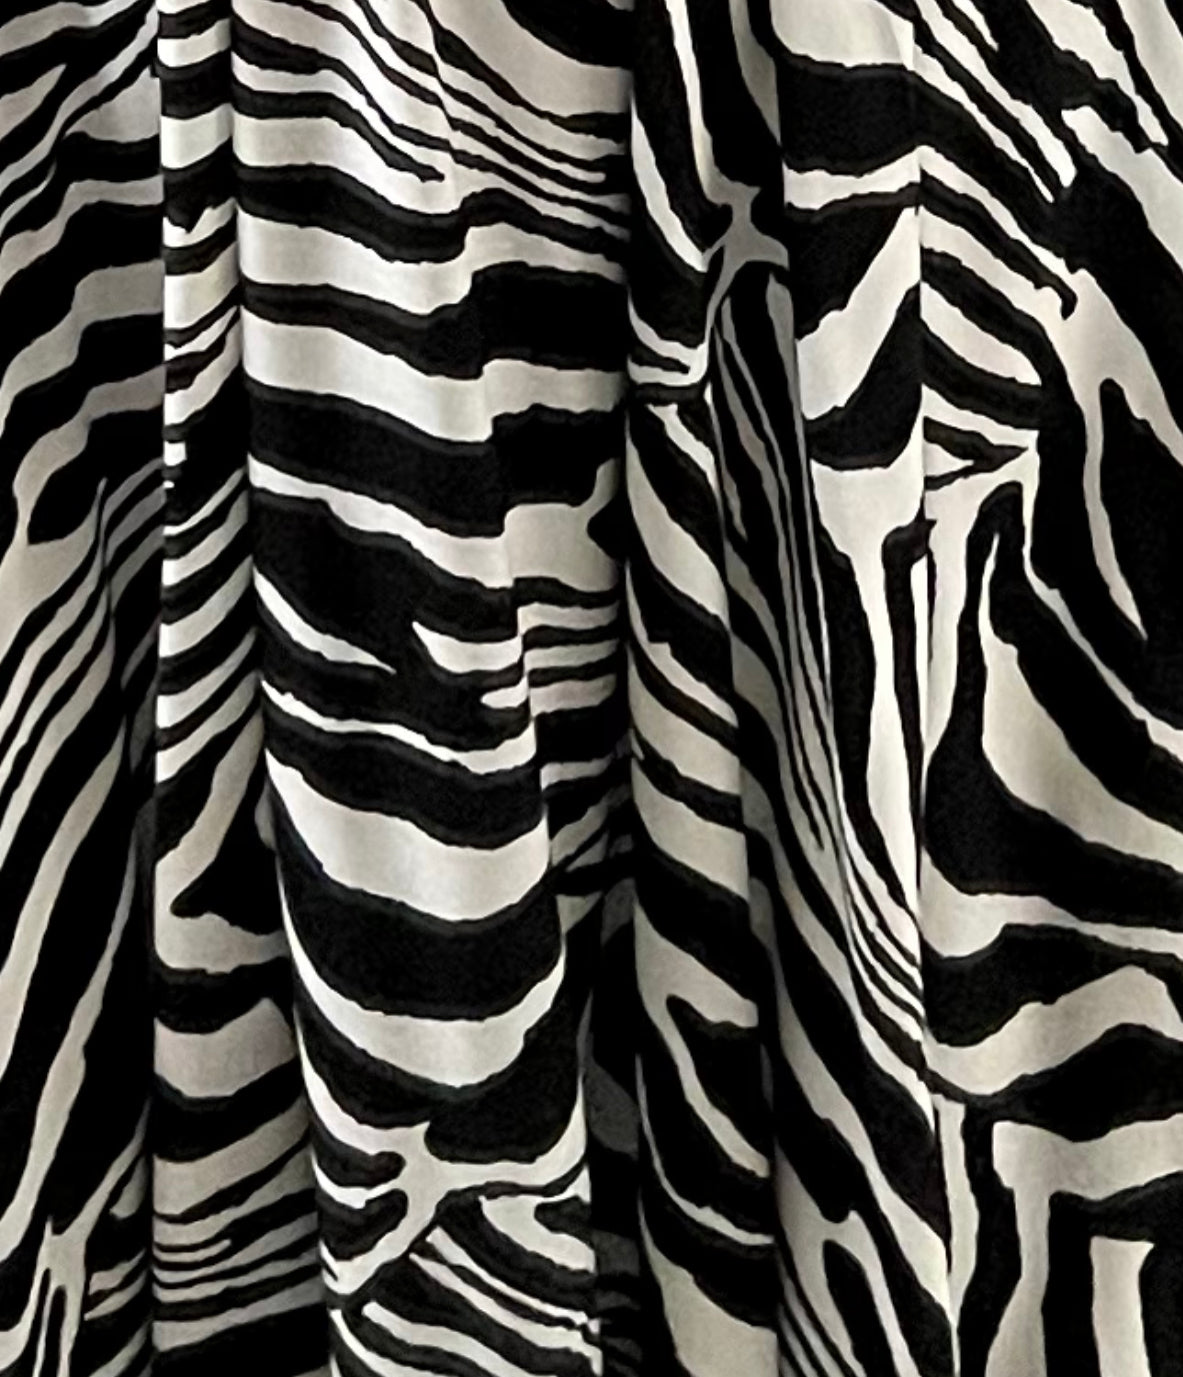 Butterfly skirt/dress - Zebra